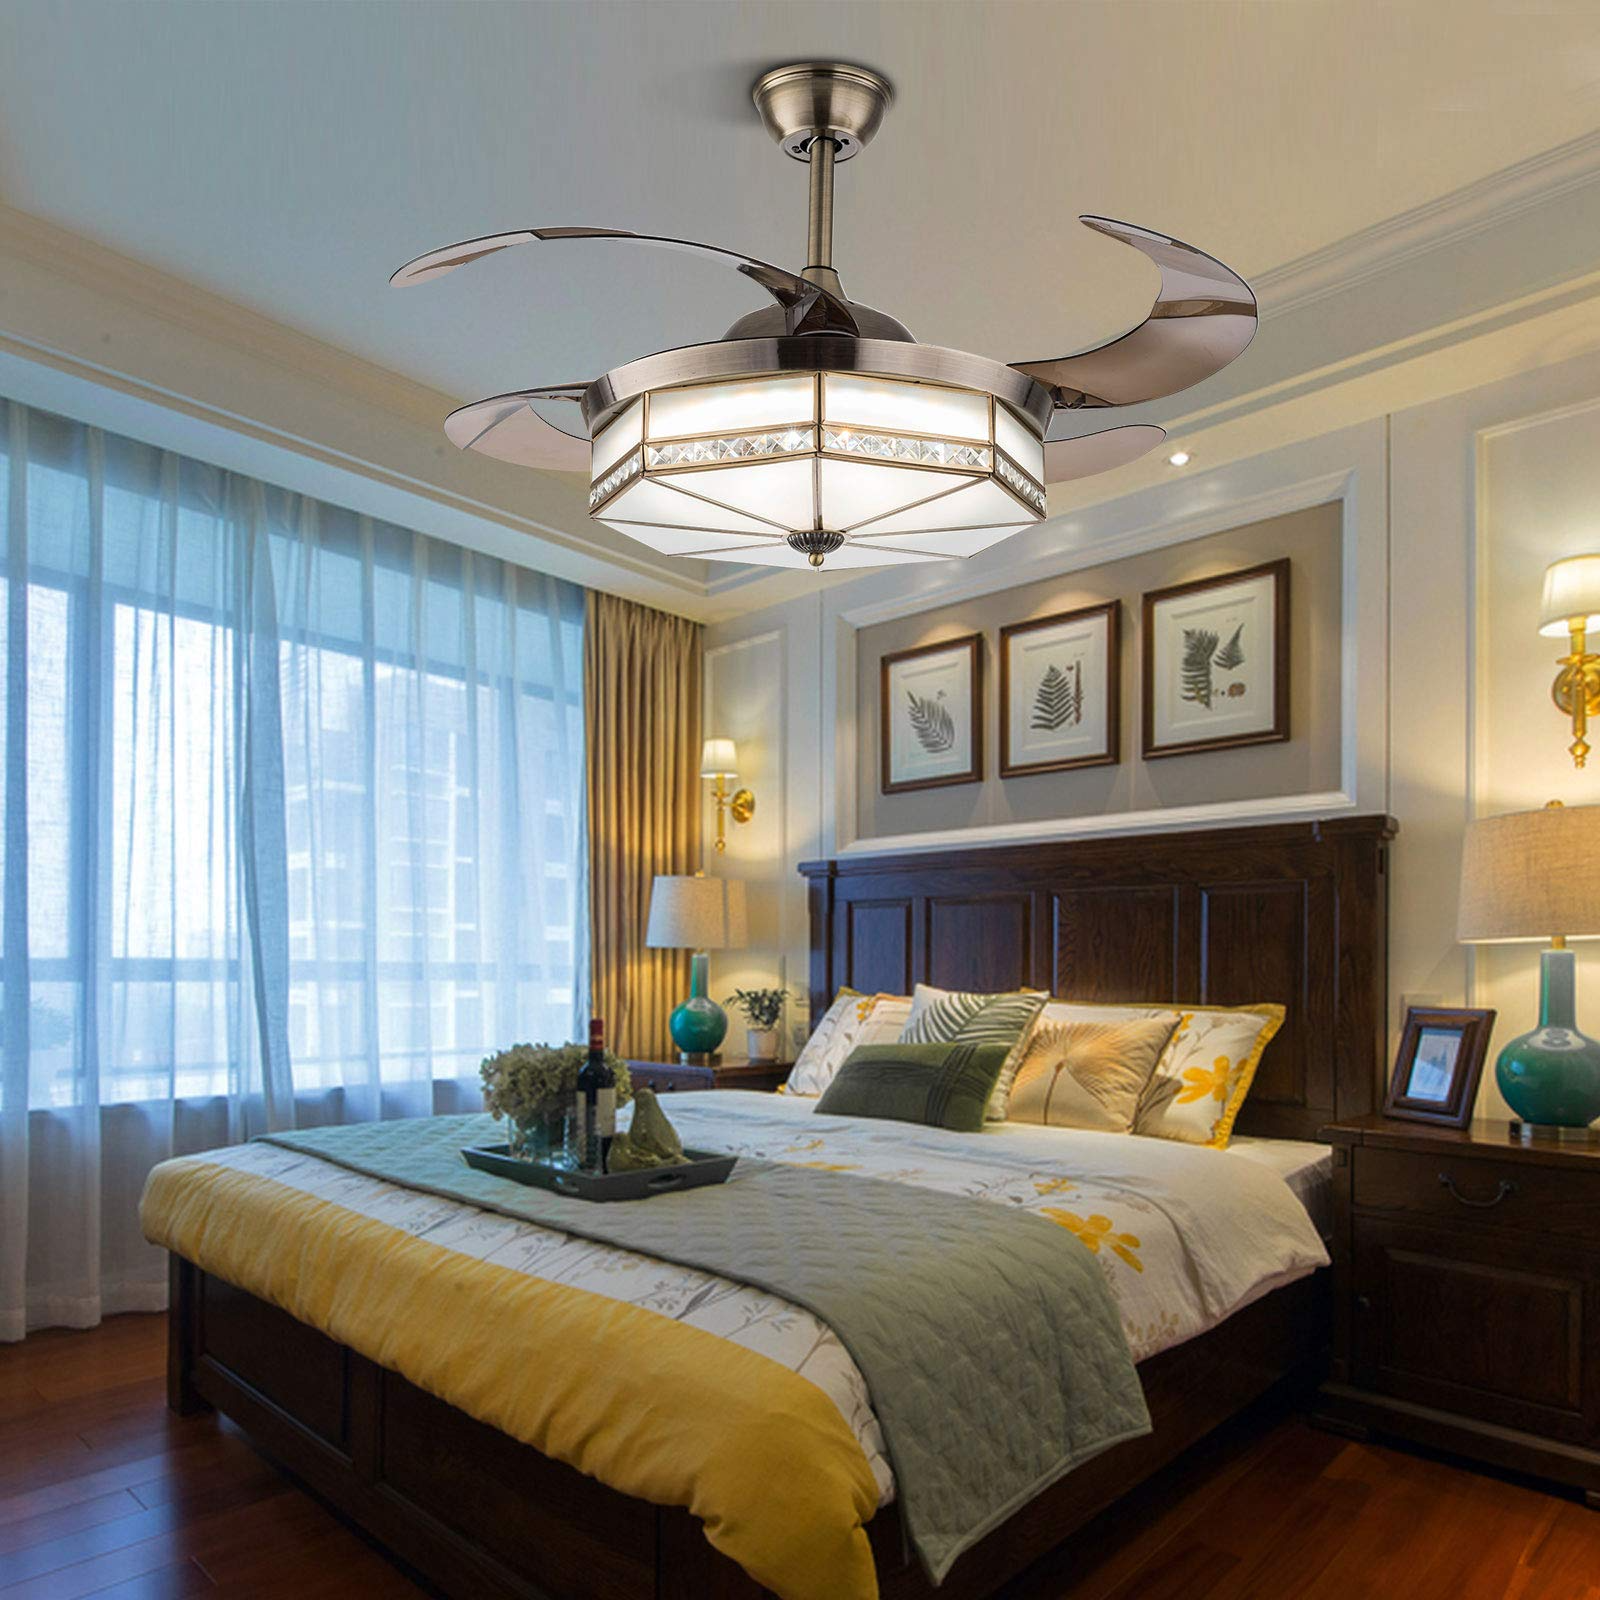 42 Inch Copper Golden Ceiling Fans with LED Light for bedroom 